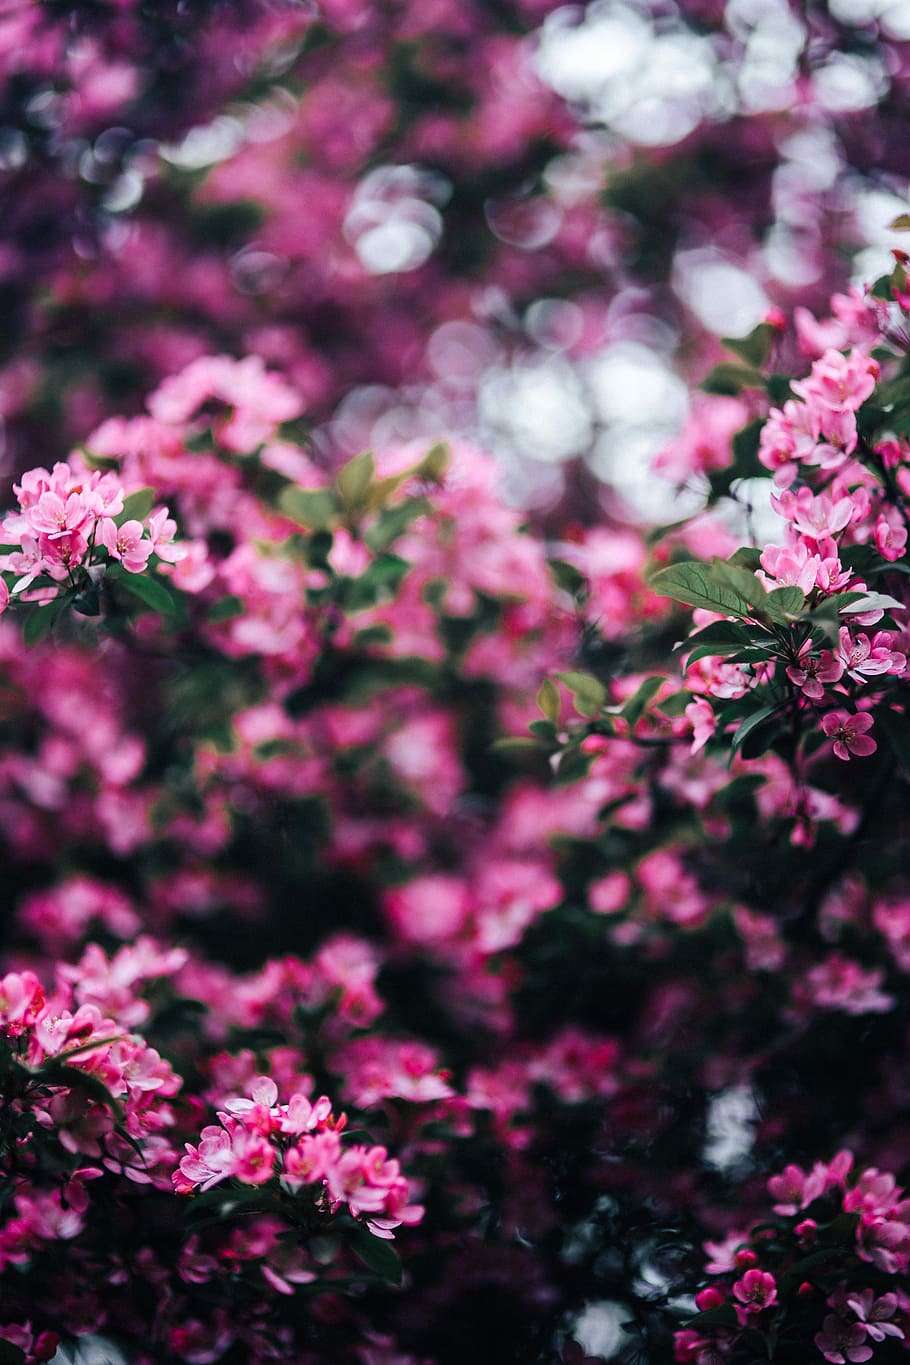 indah, merah muda, bunga, berbunga, cabang-cabang pohon, pohon, cabang, menyalin ruang, musim semi, mekar